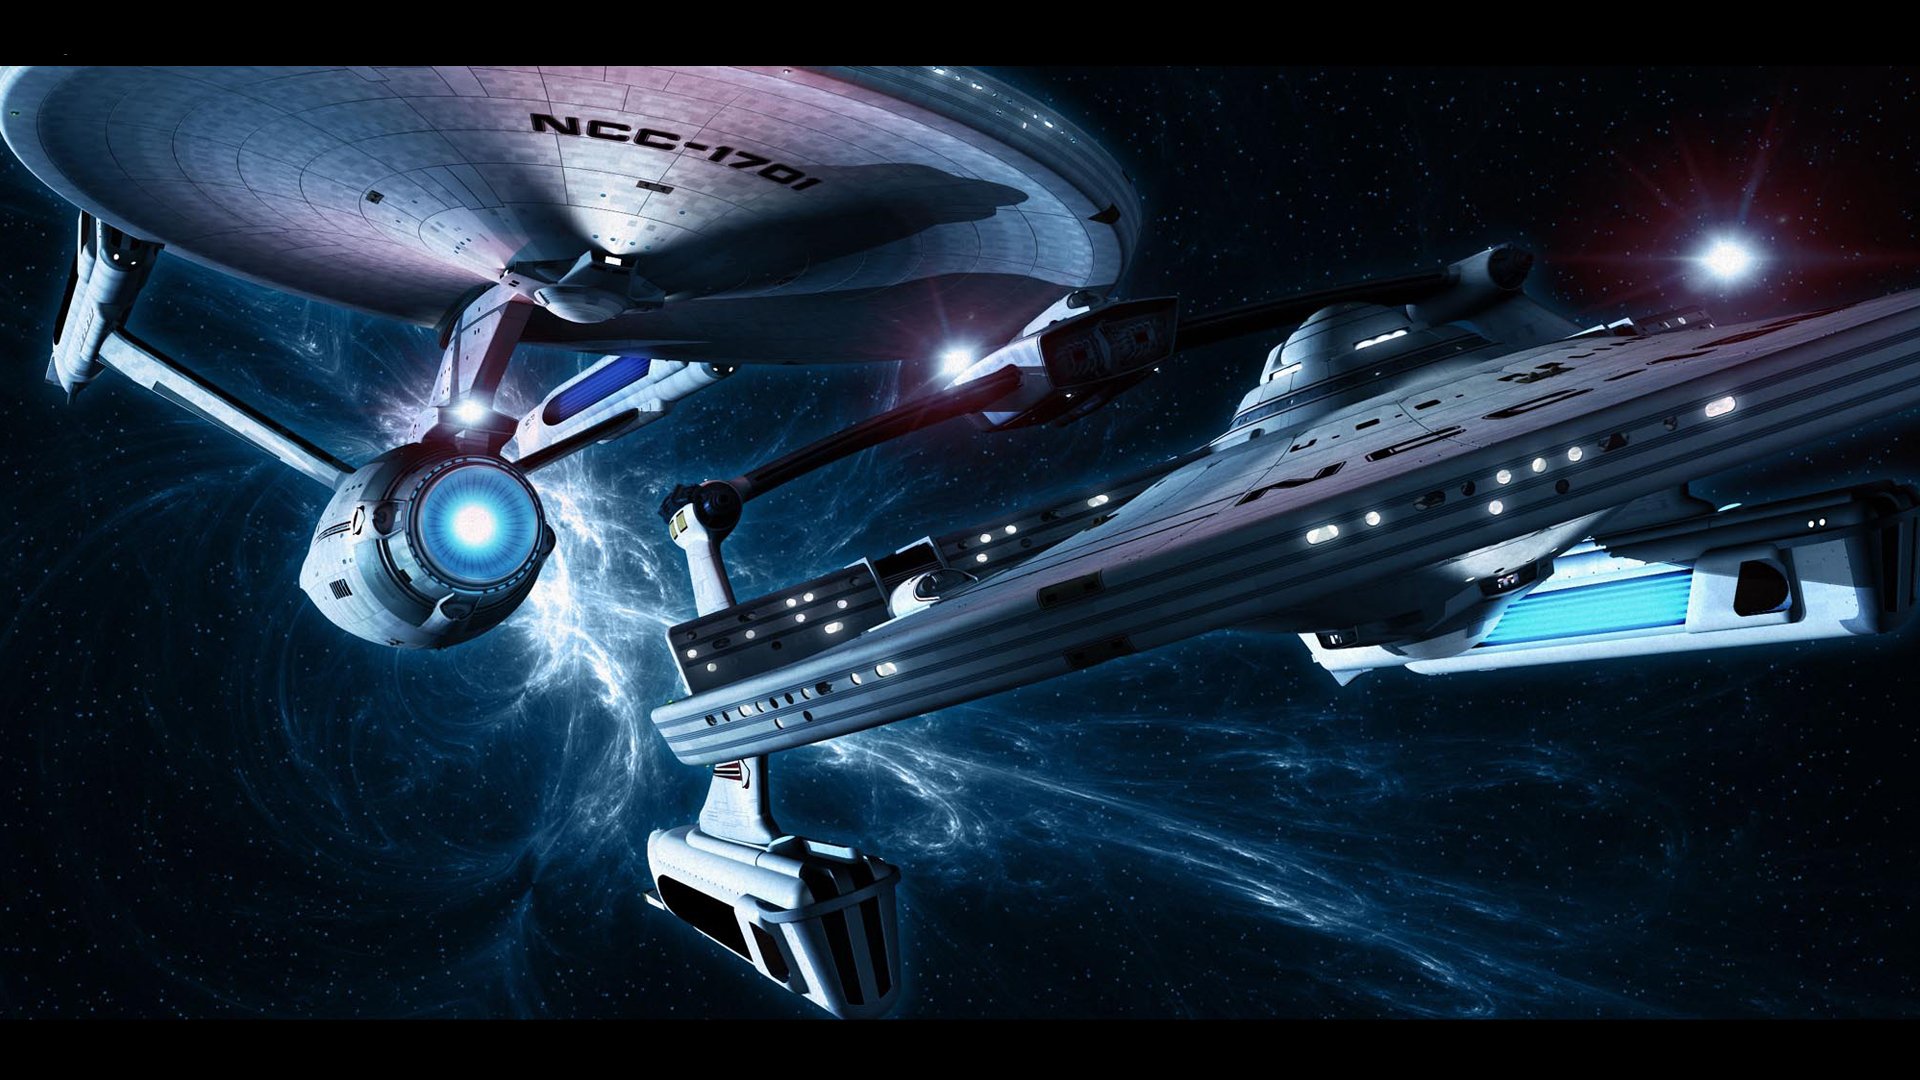 Star Trek starships, Enterprise and Reliant, in space.